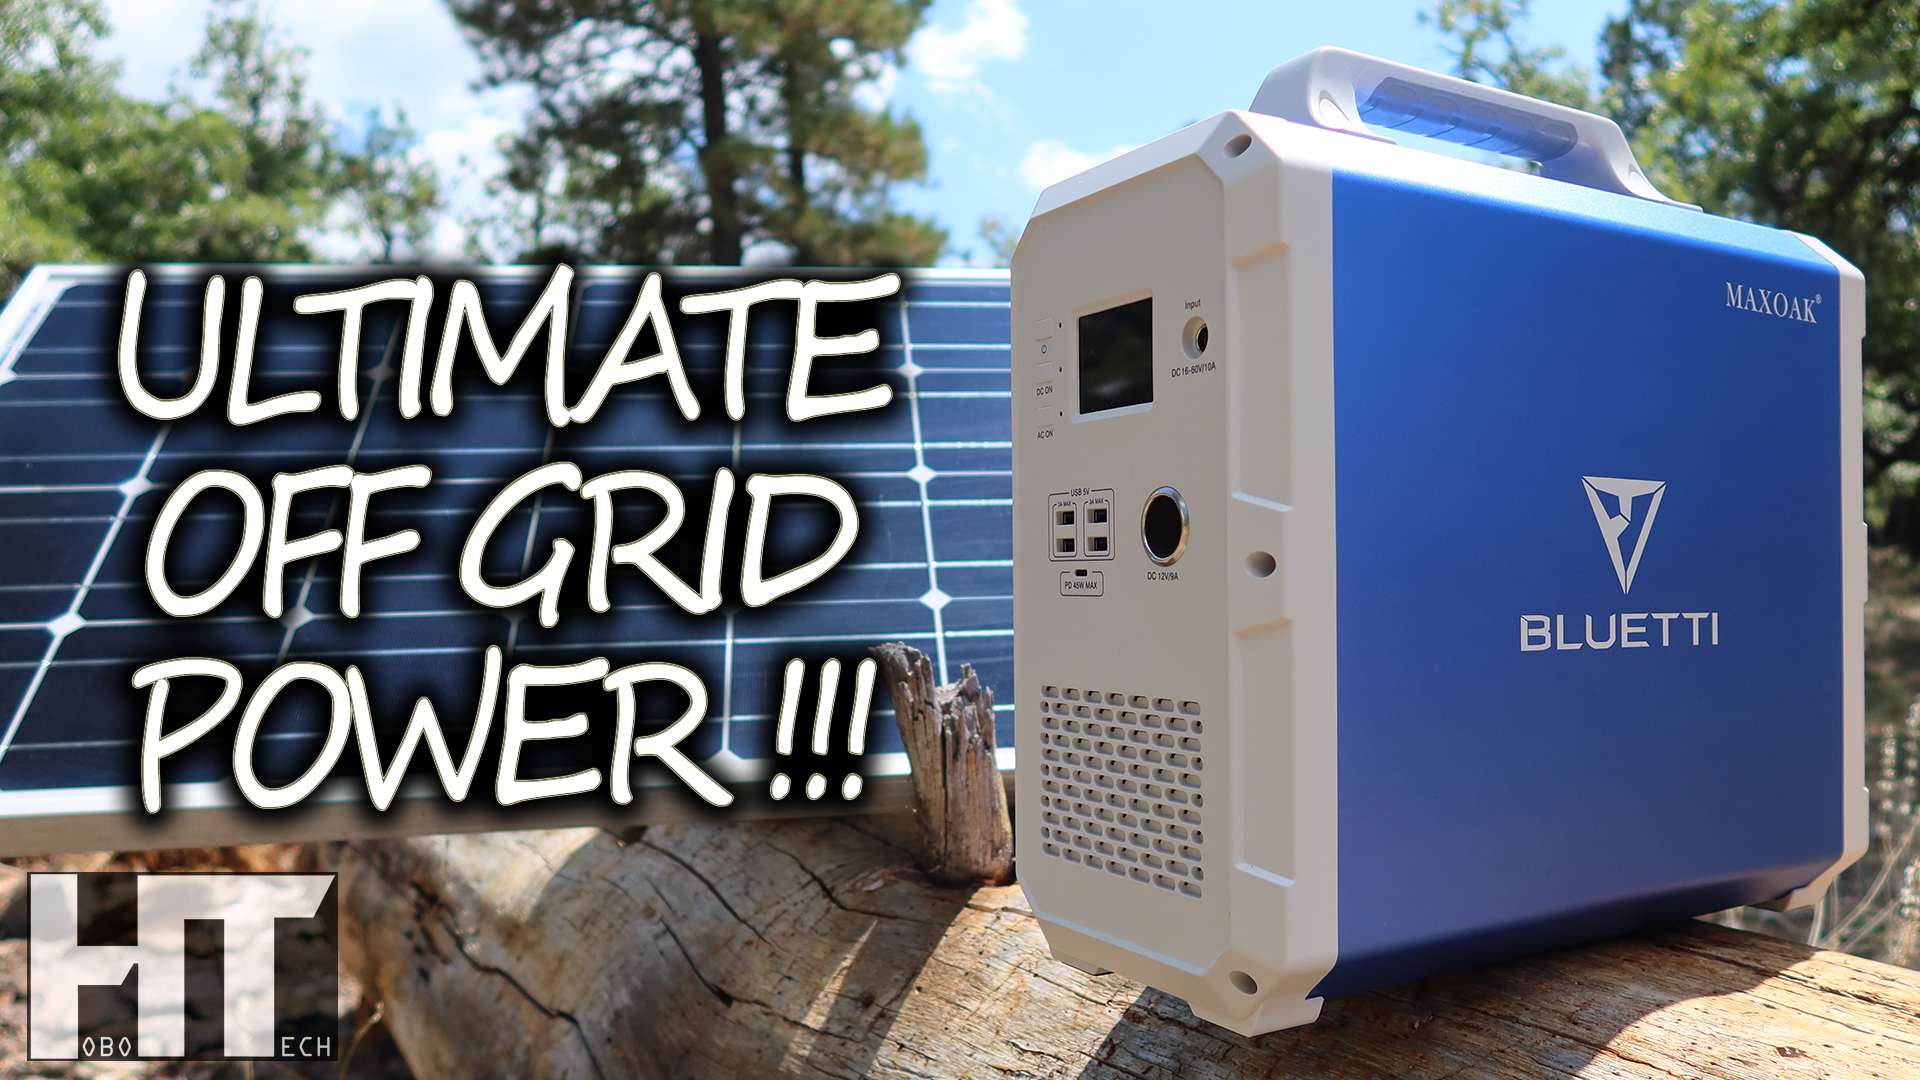 Off grid generator battery system